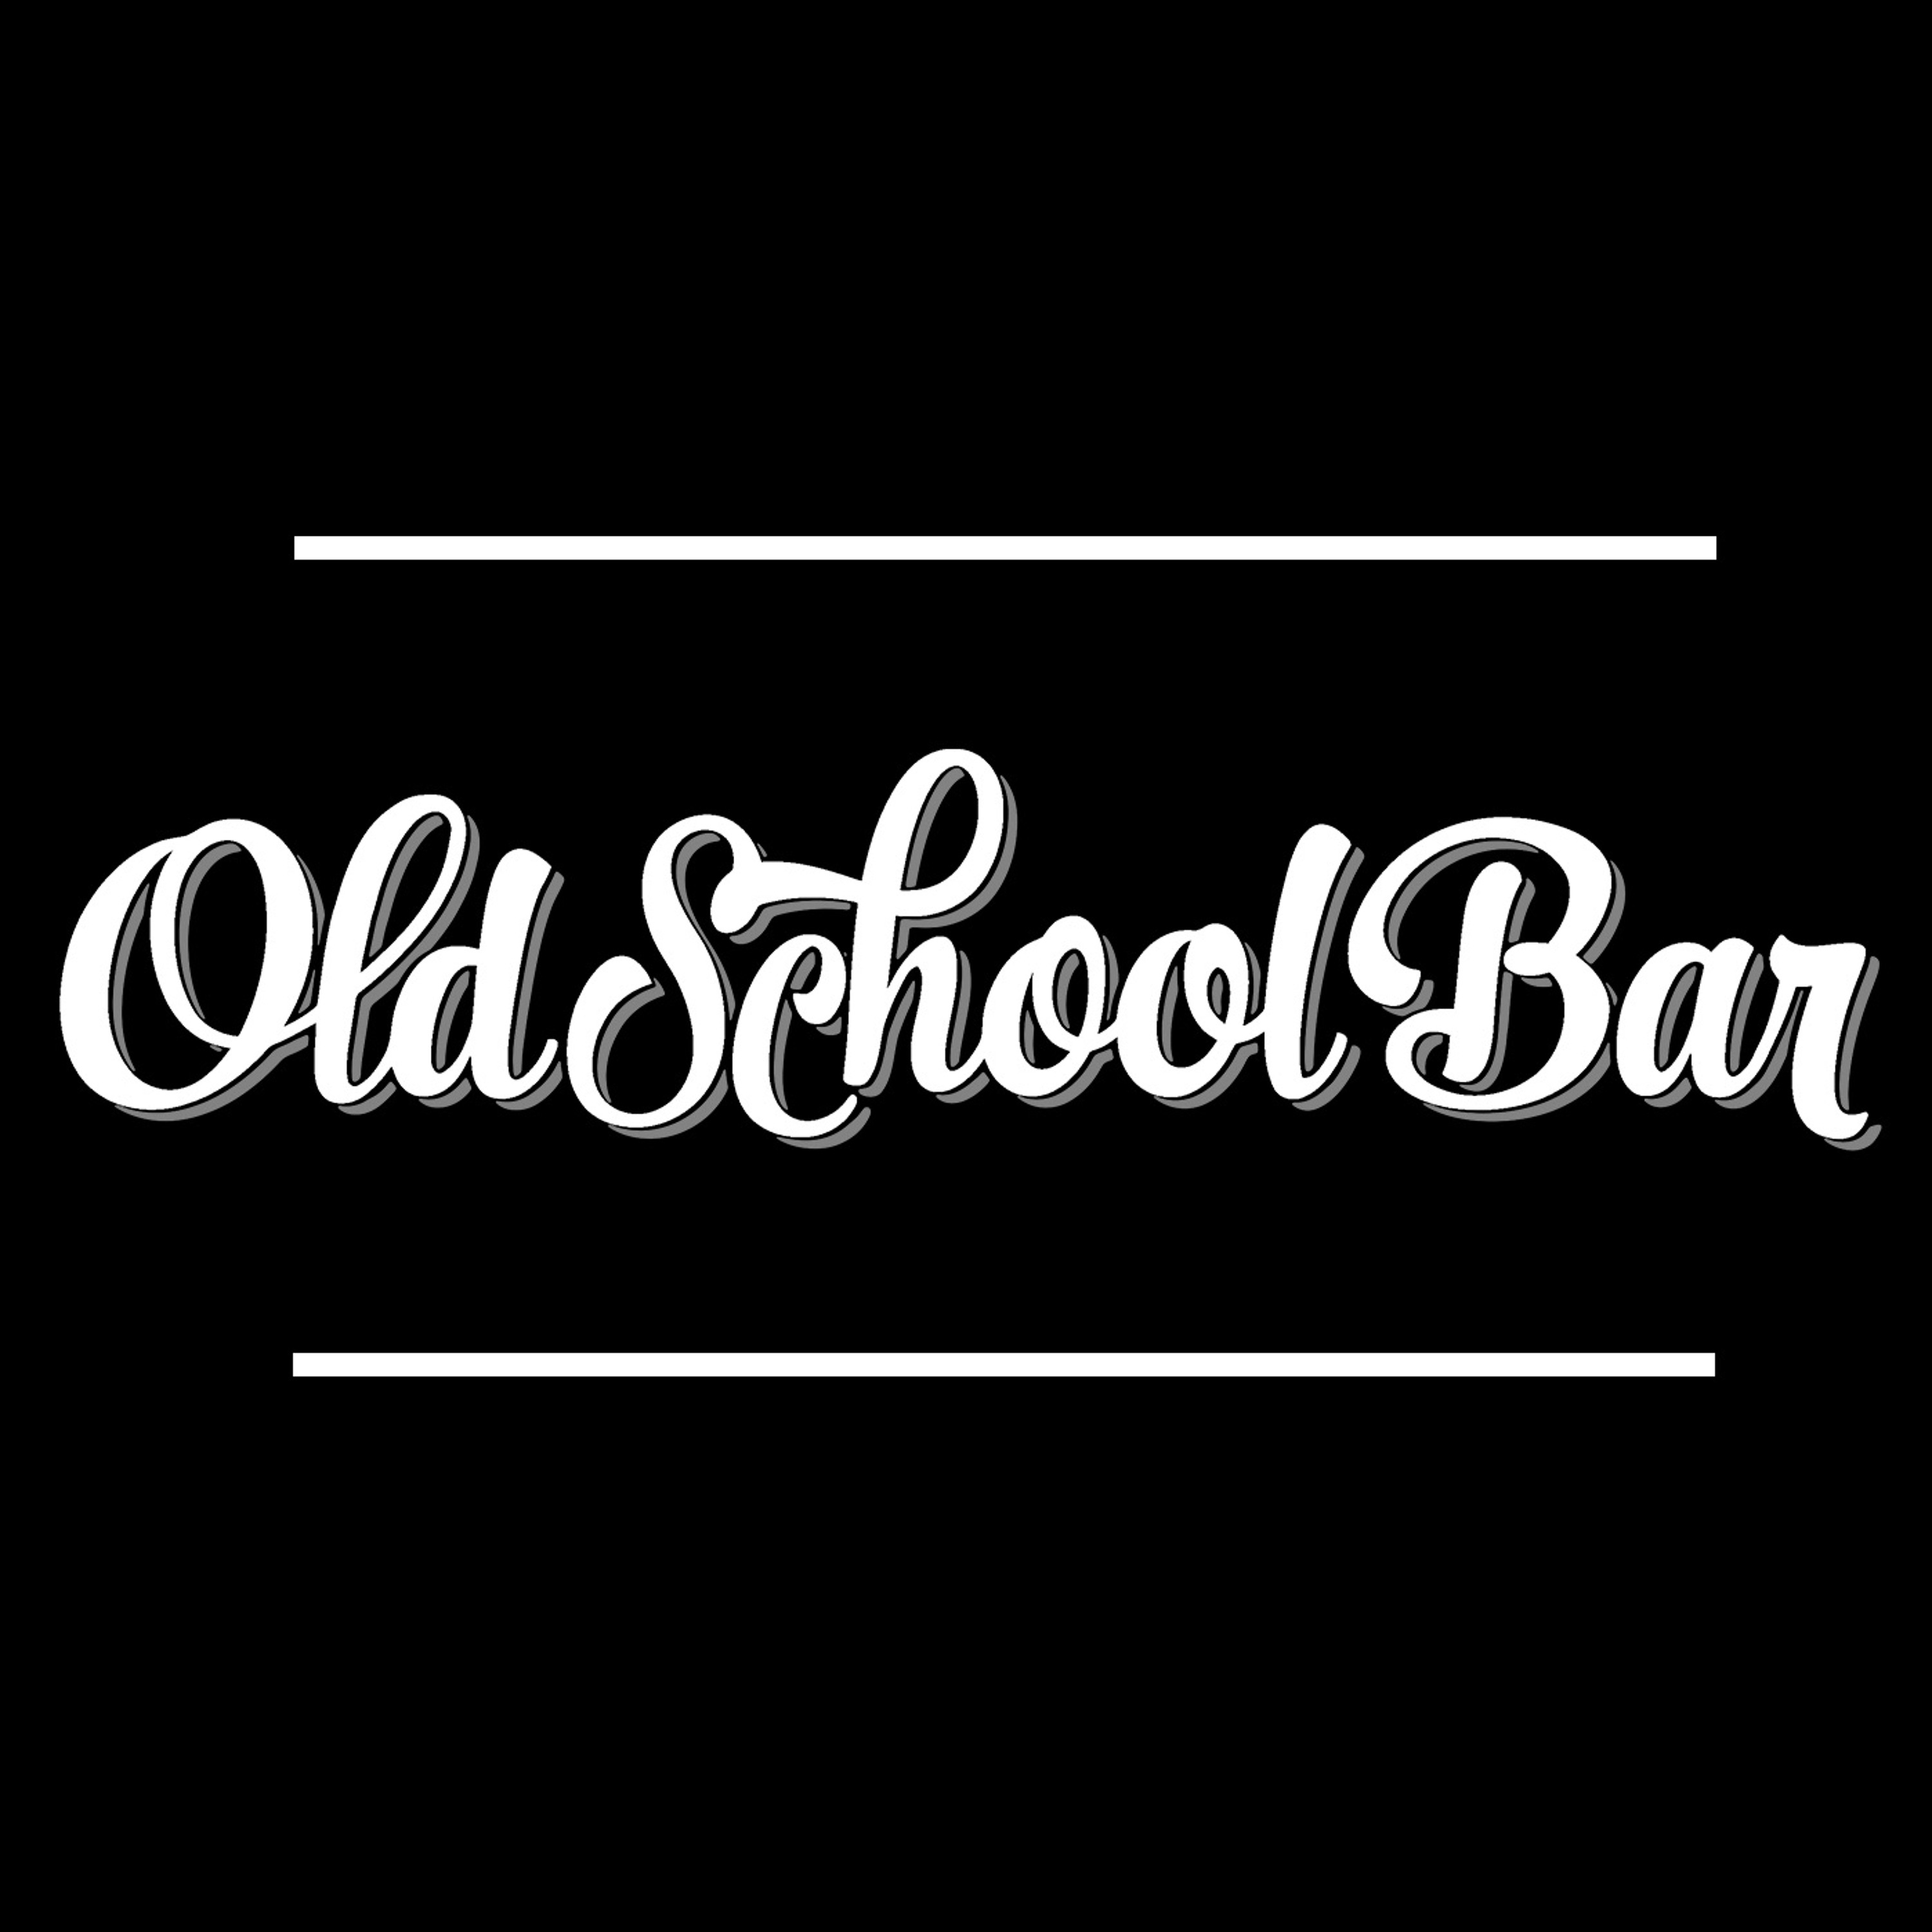 002 Old School Bar Podcast